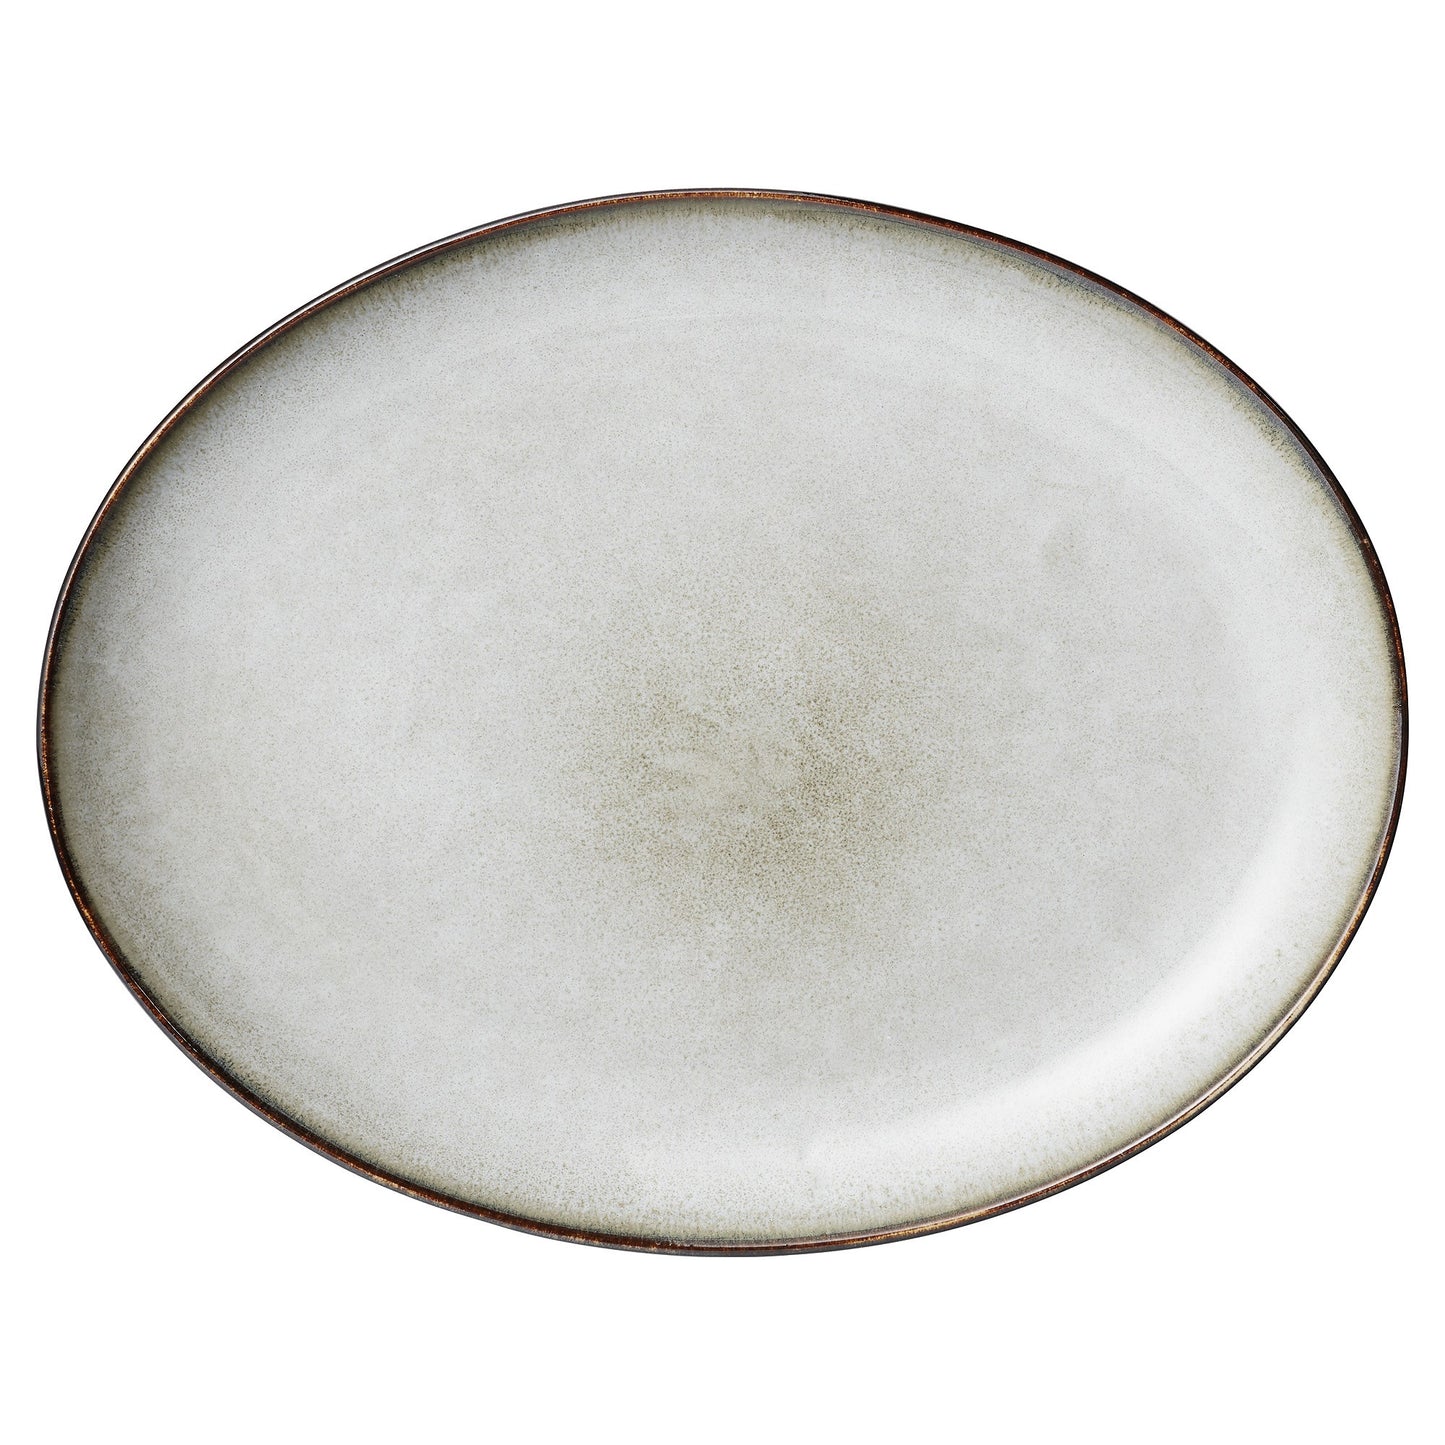 Servierplatte oval Amera grau, in 3 Größen